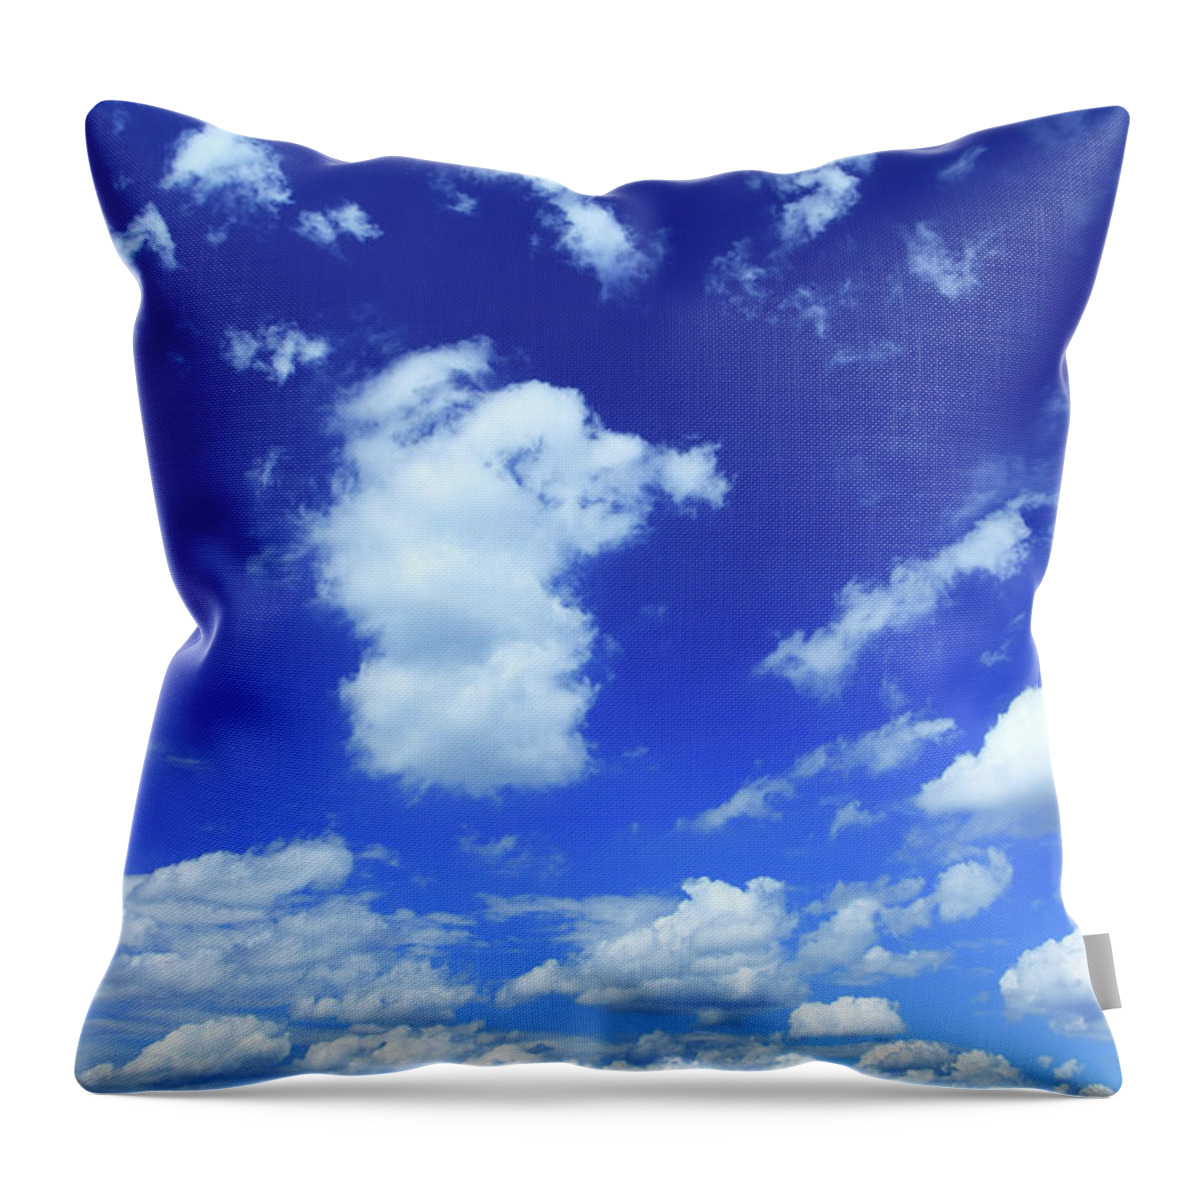 Scenics Throw Pillow featuring the photograph Blue Sky - Xxxl Size #1 by Konradlew